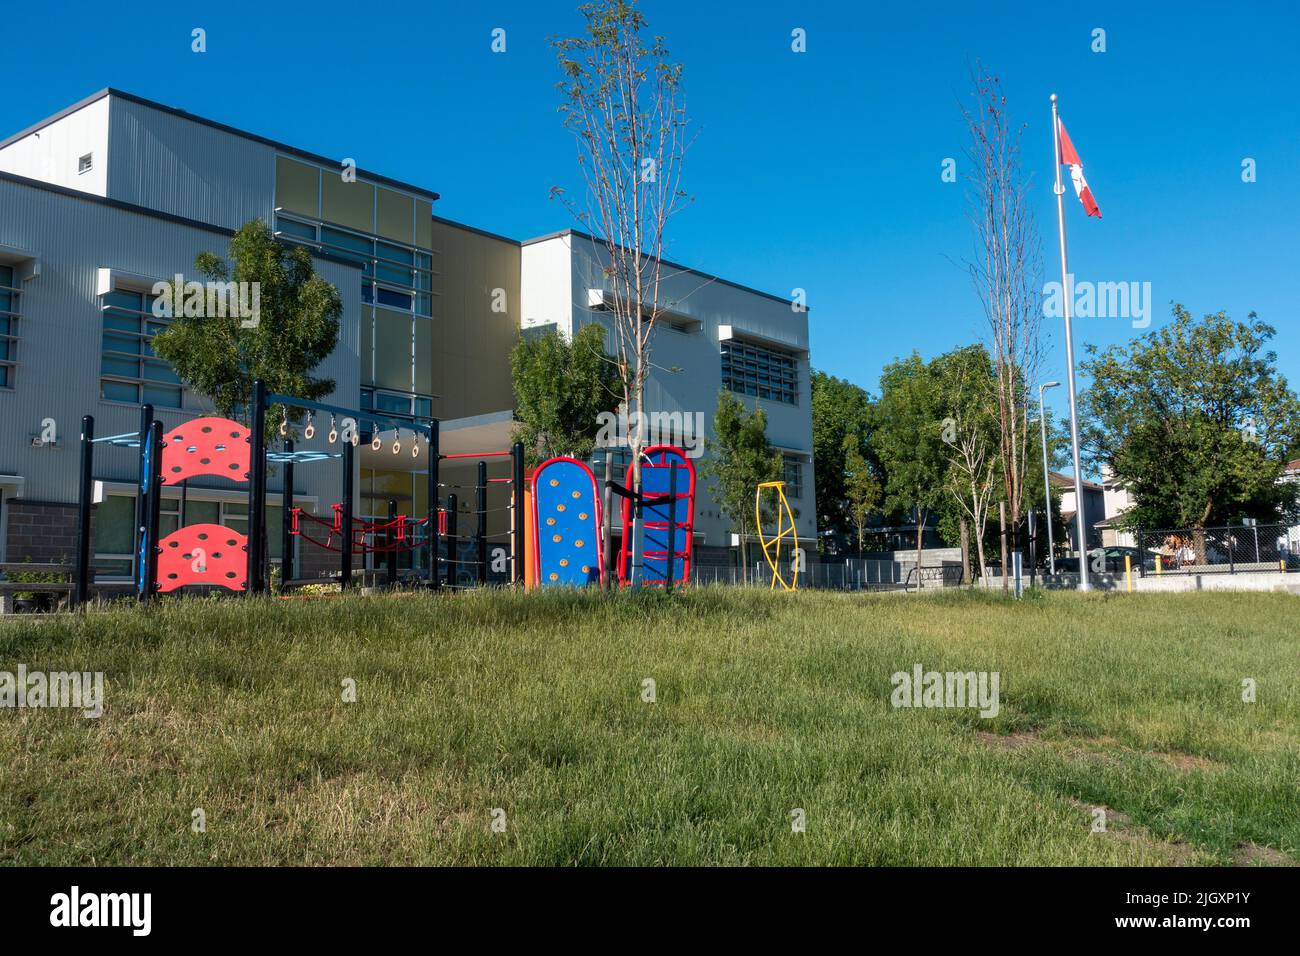 Modern elementary school building with playground equipment Stock Photo